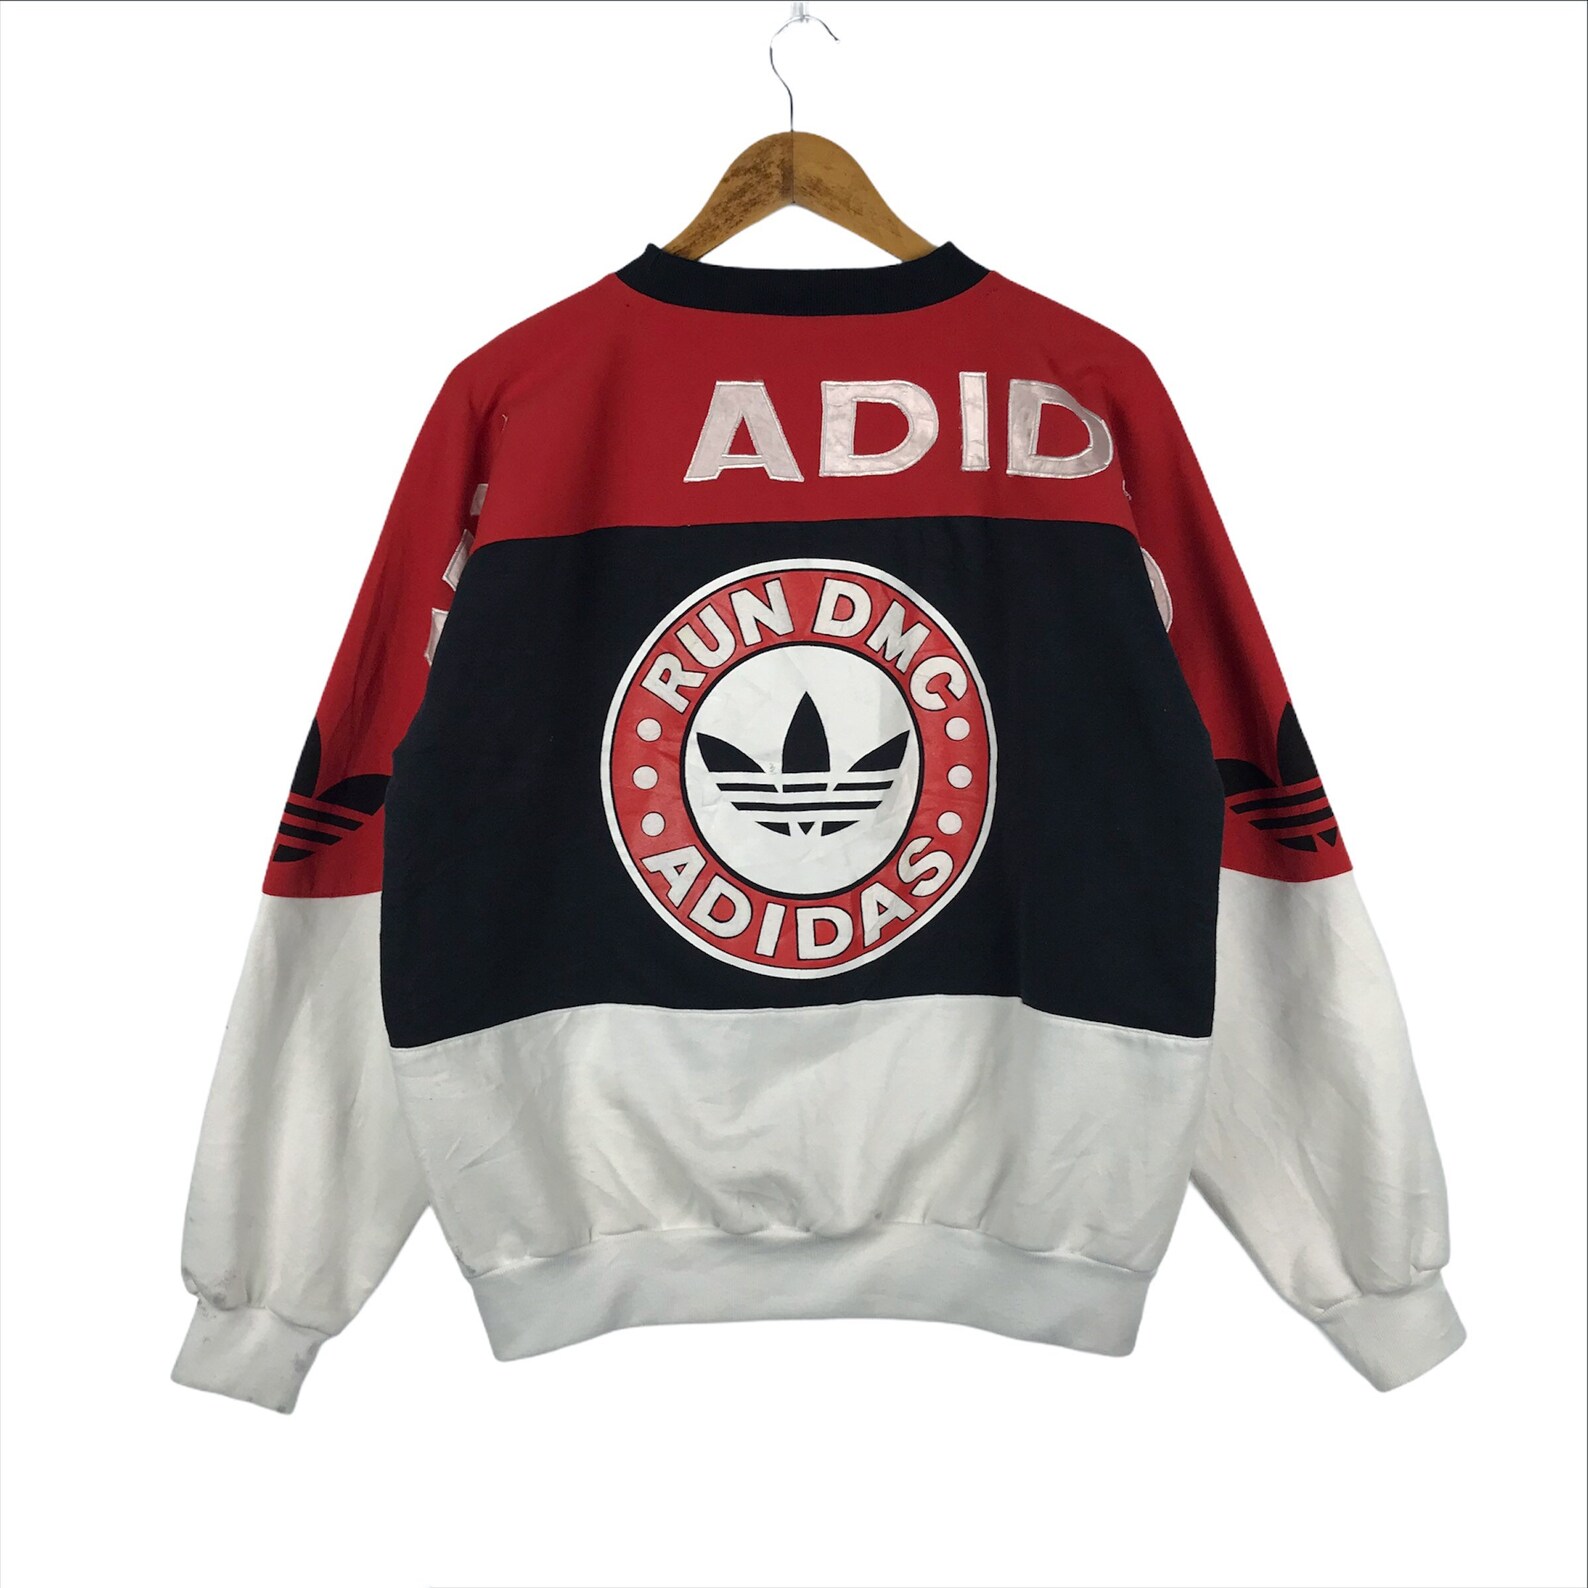 Super RARE Vintage 80s Adidas Run Dmc Sweatshirt Jumper | Etsy